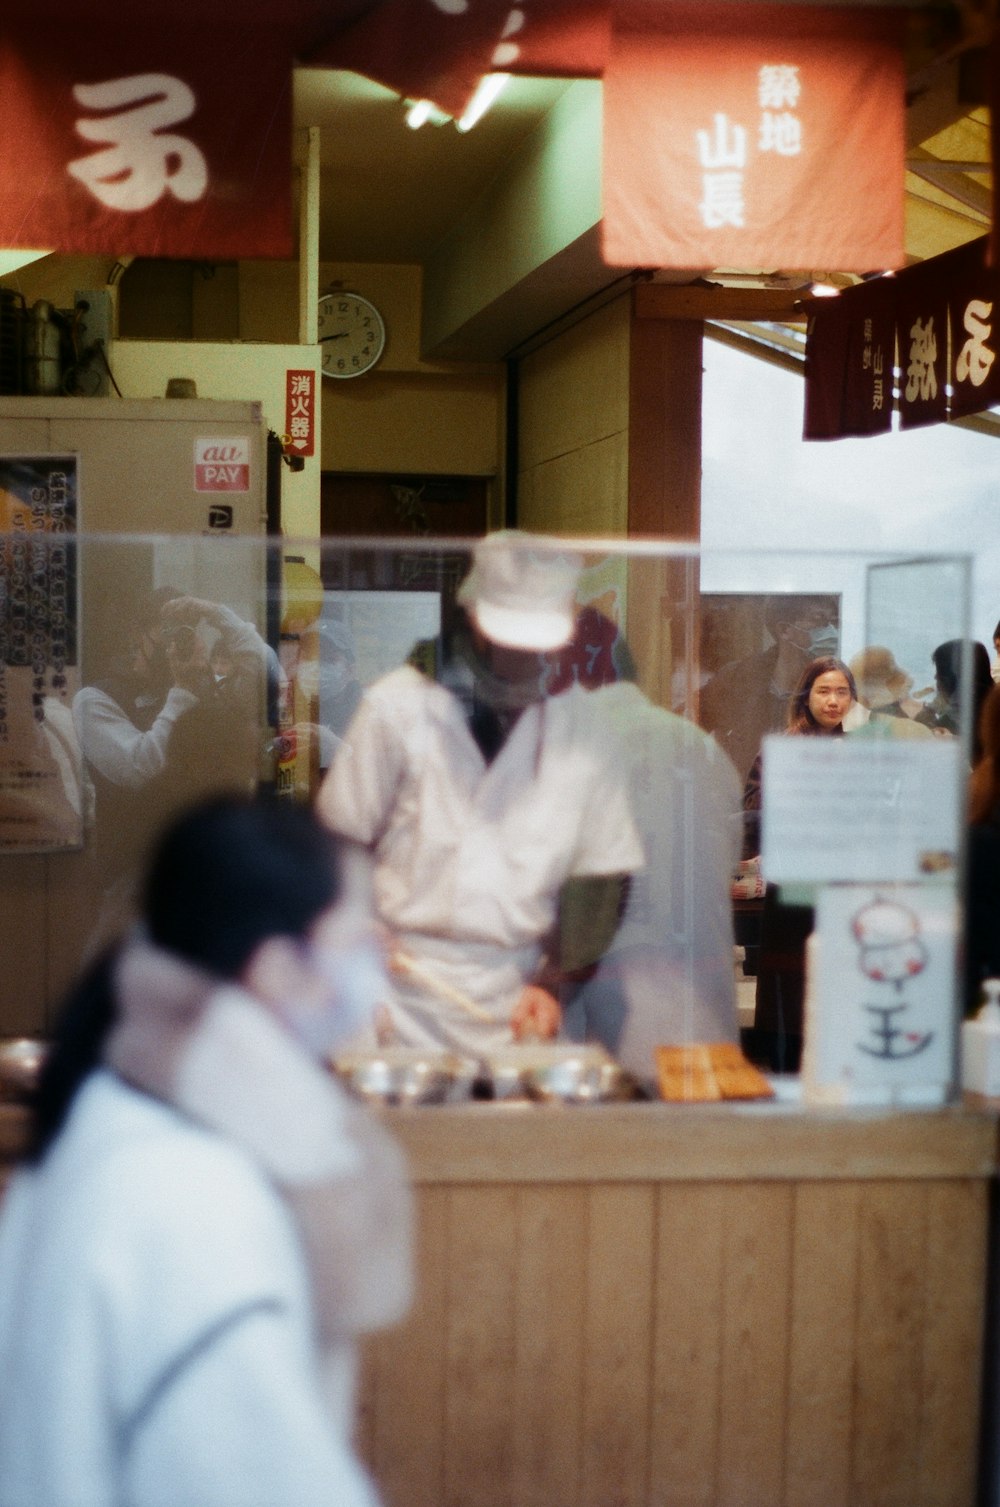 a blurry photo of a man behind a counter